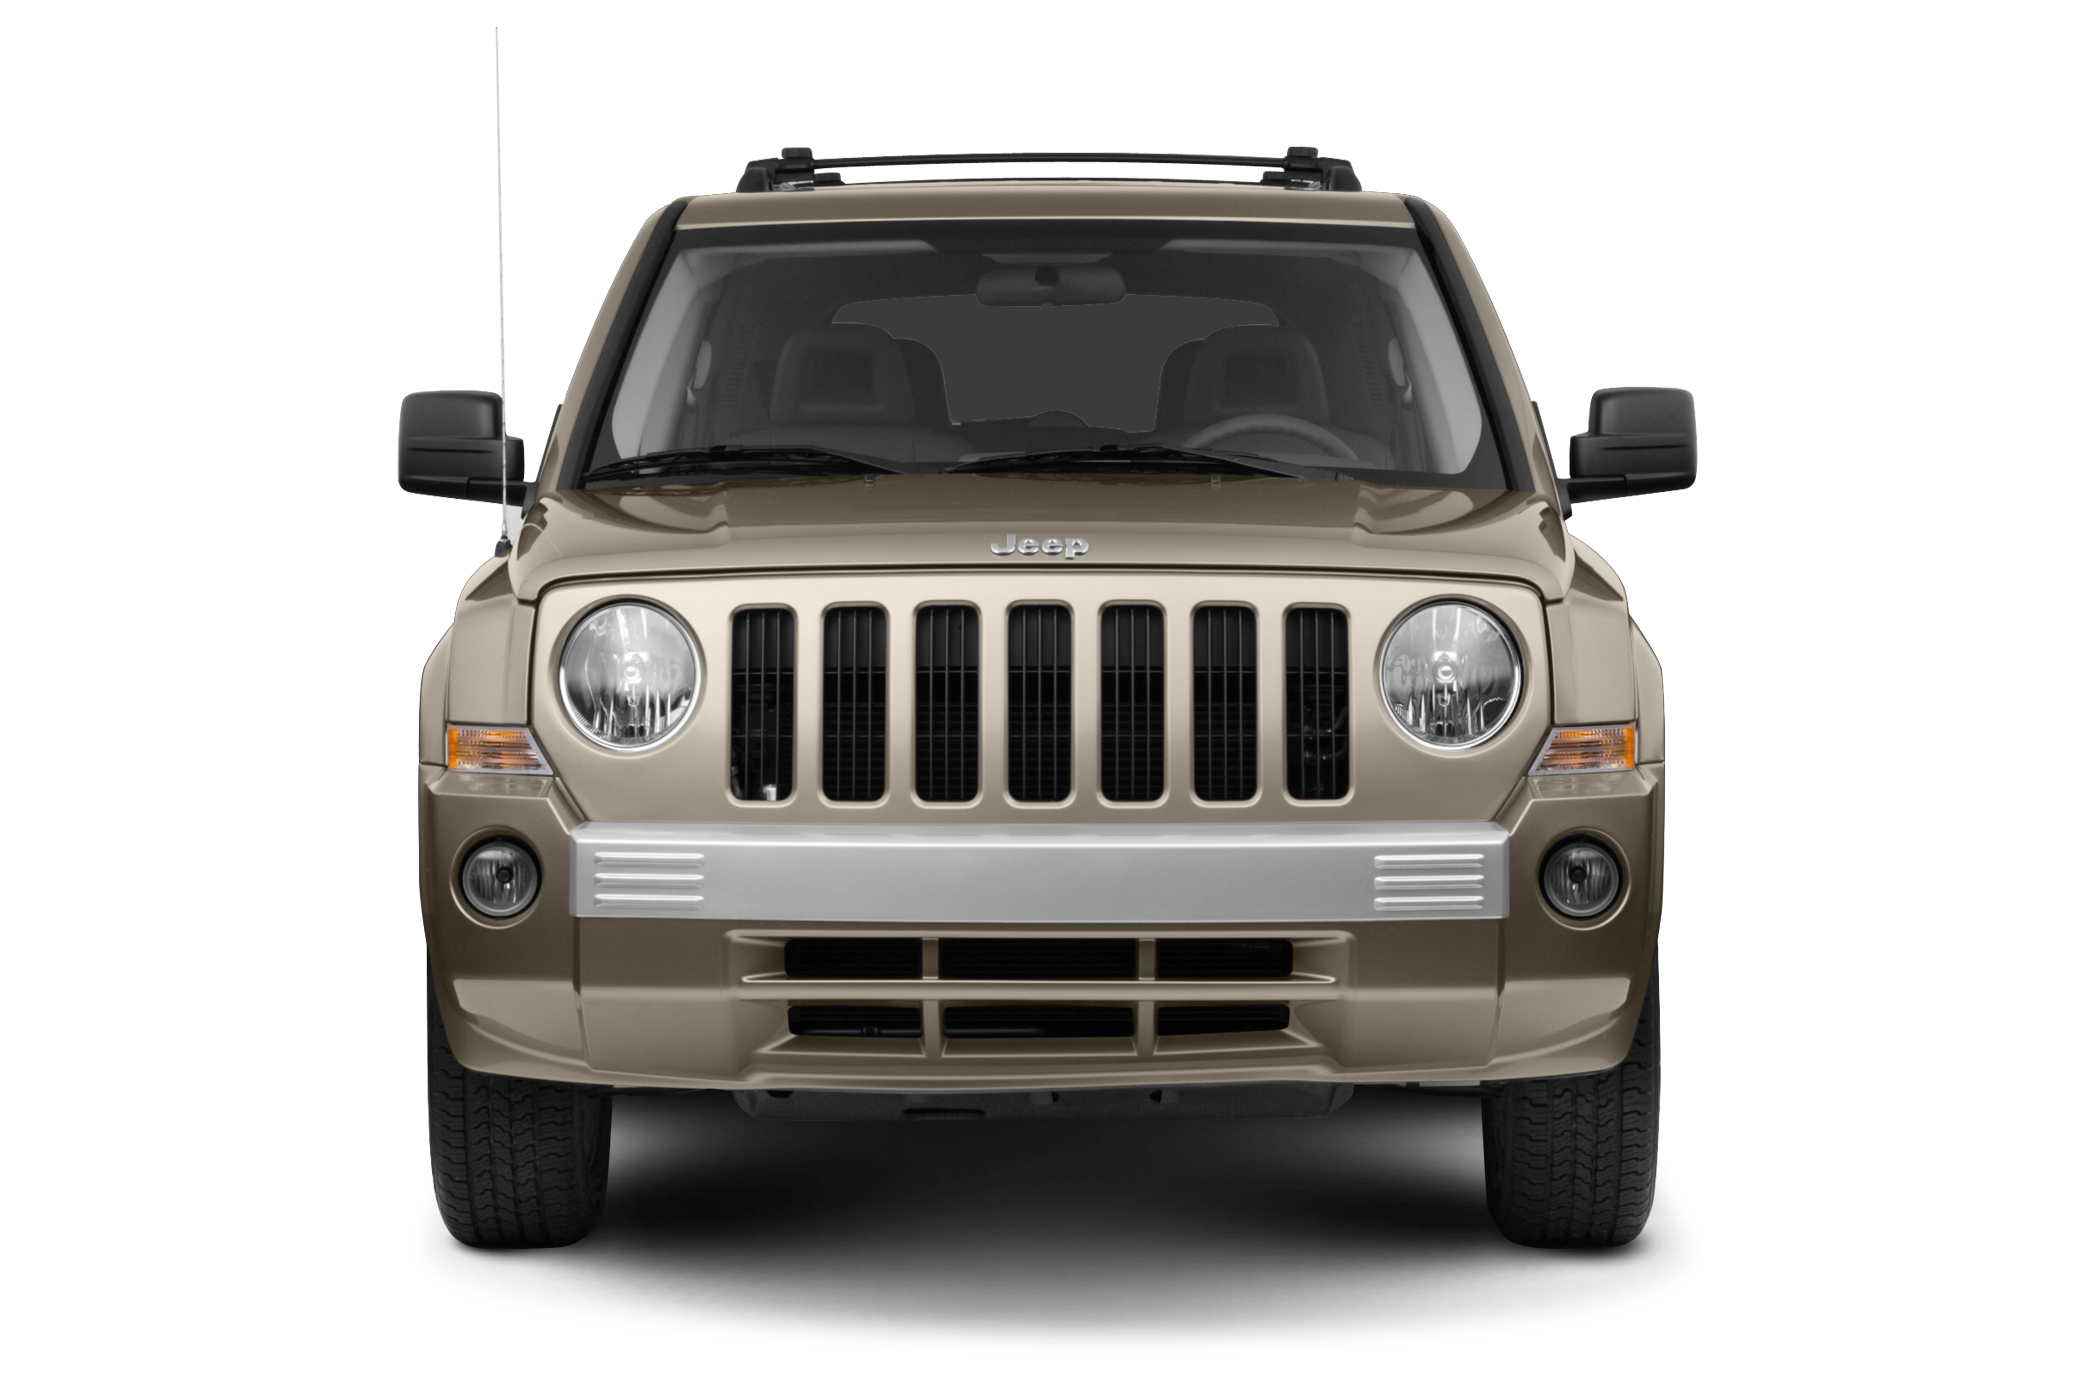 2007 Jeep Patriot